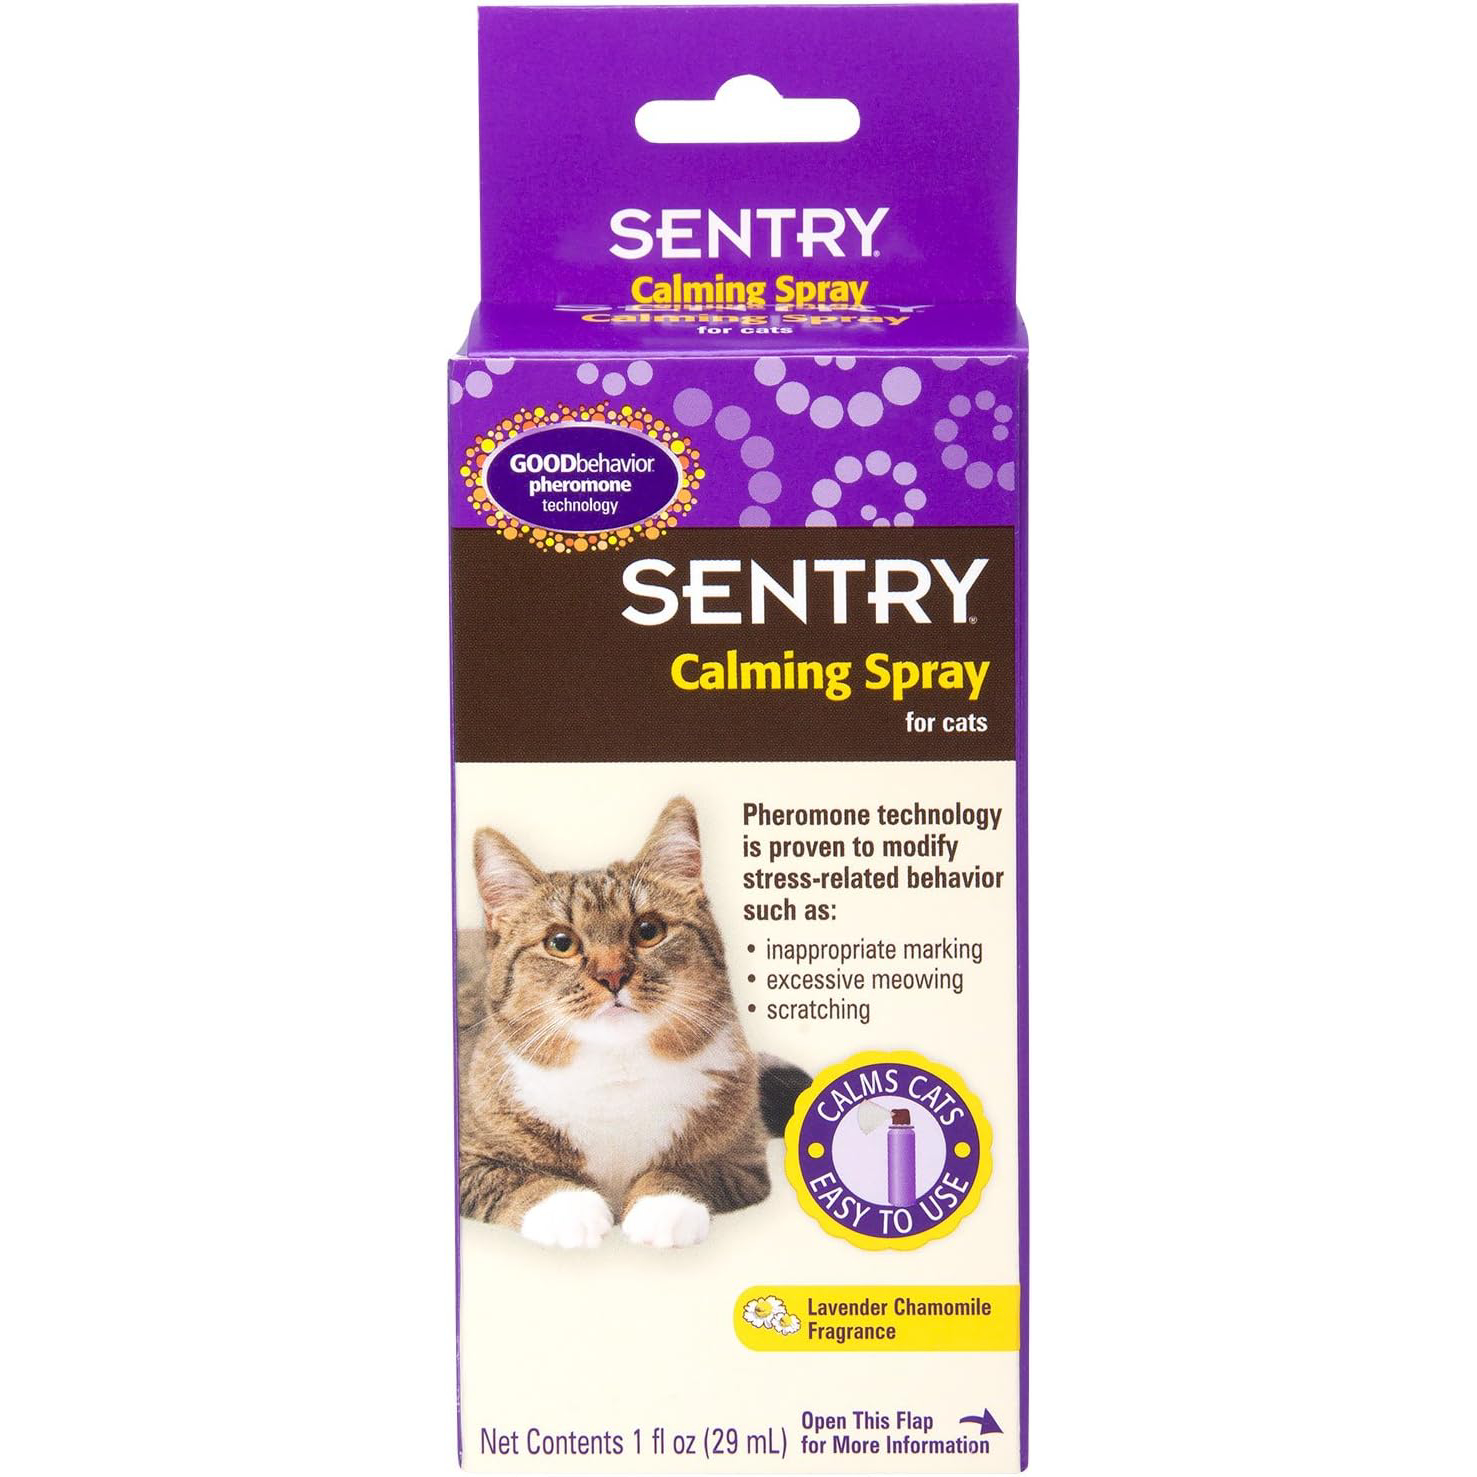 SENTRY GOOD Behavior Calming Spray for Cats